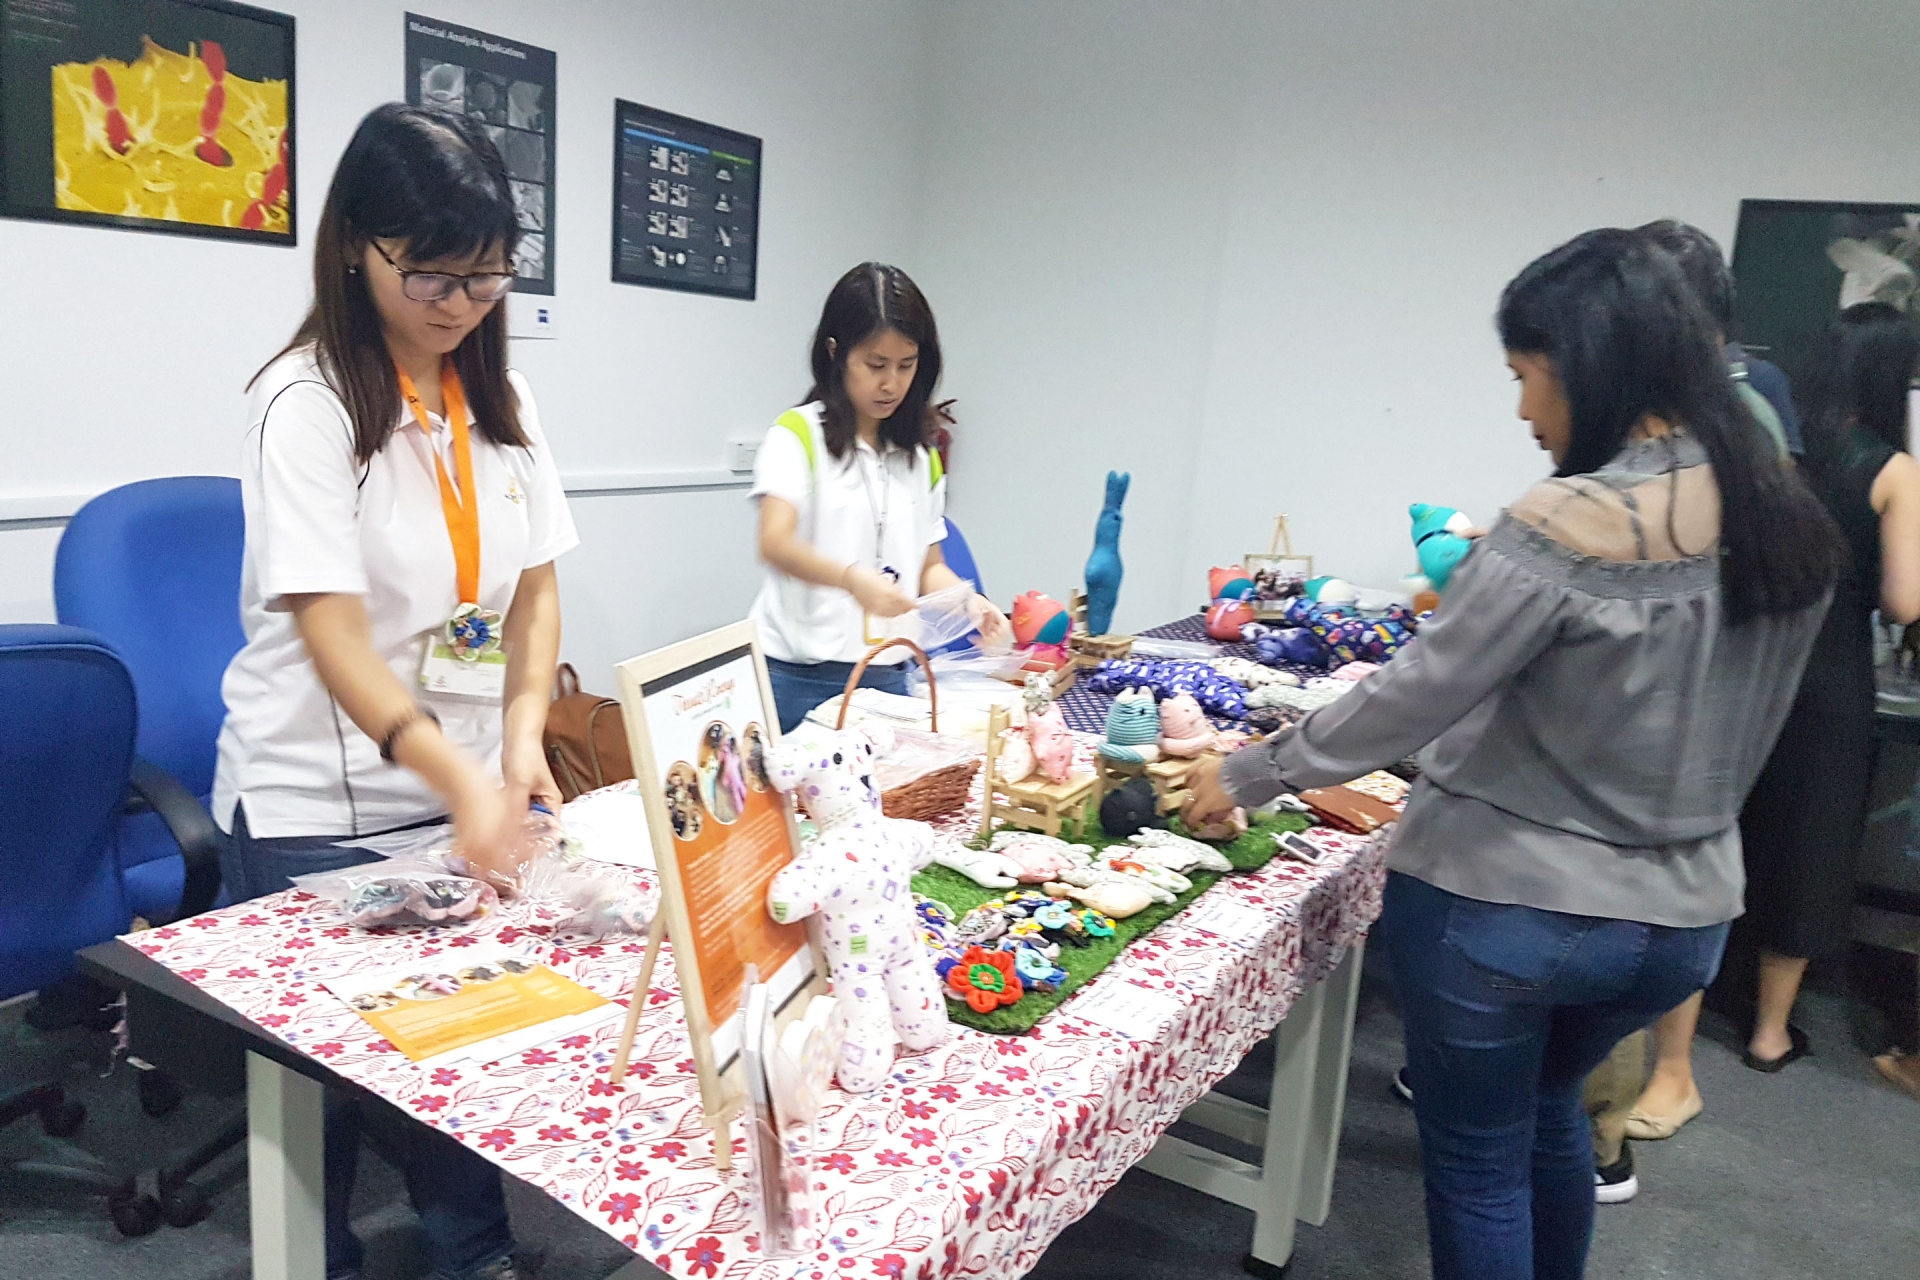 Fei Yue personnel prepared a kiosk showcasing goods such as cushions, pouches.